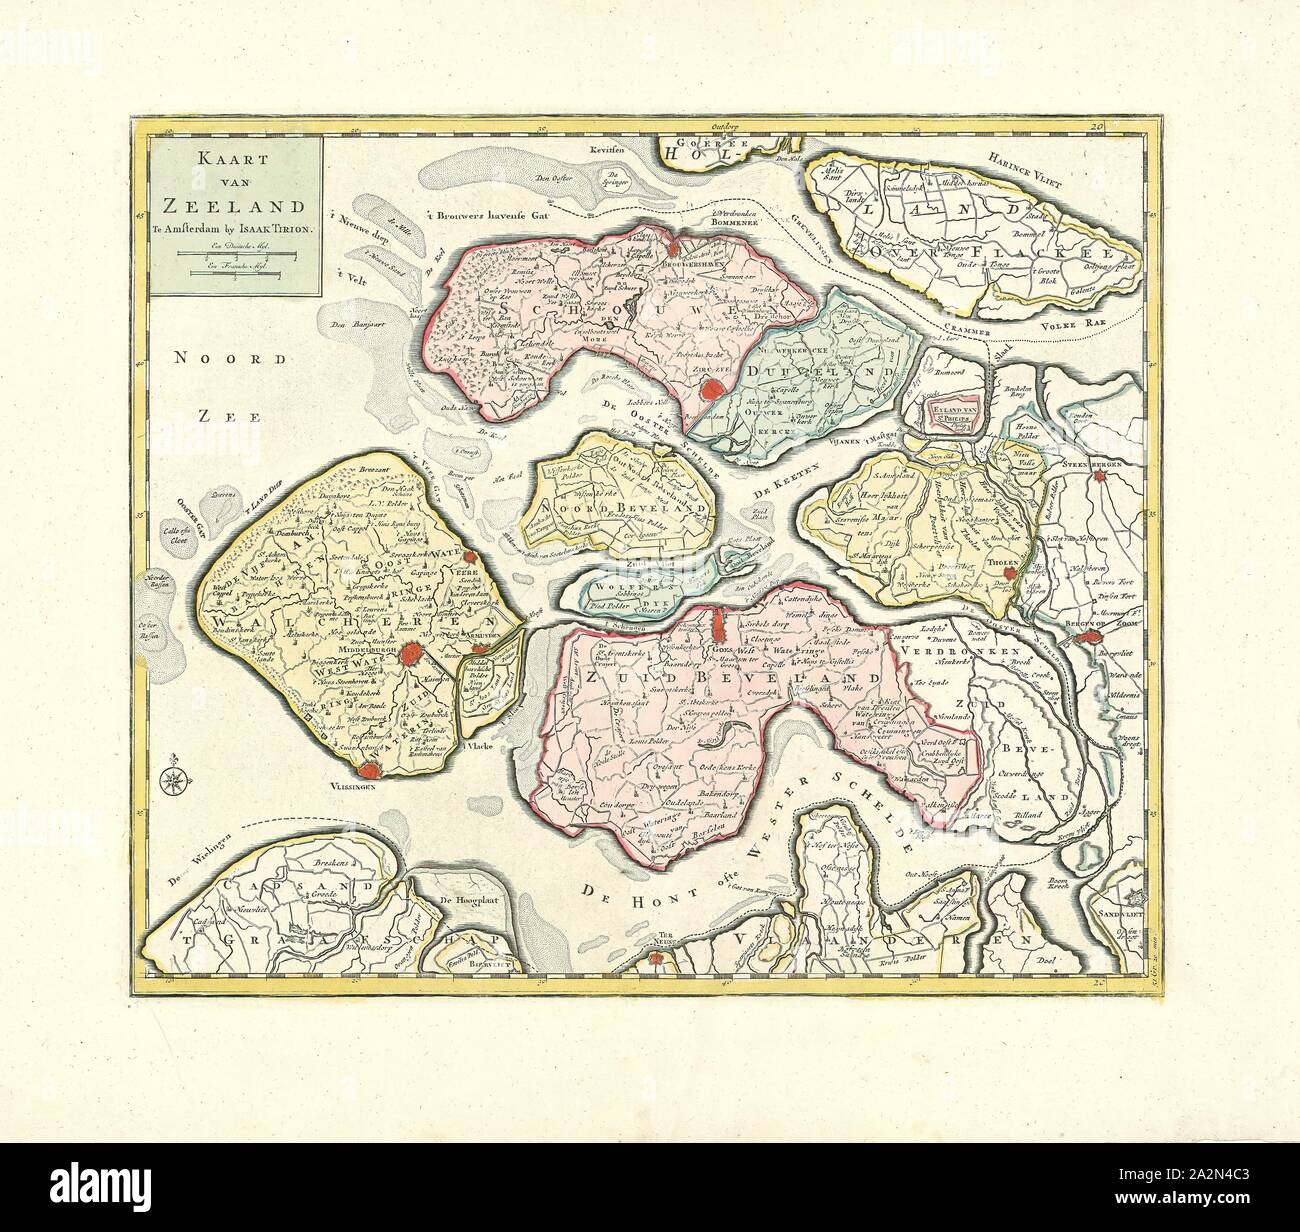 Map, Kaart van Zeeland, Copperplate print Stock Photo